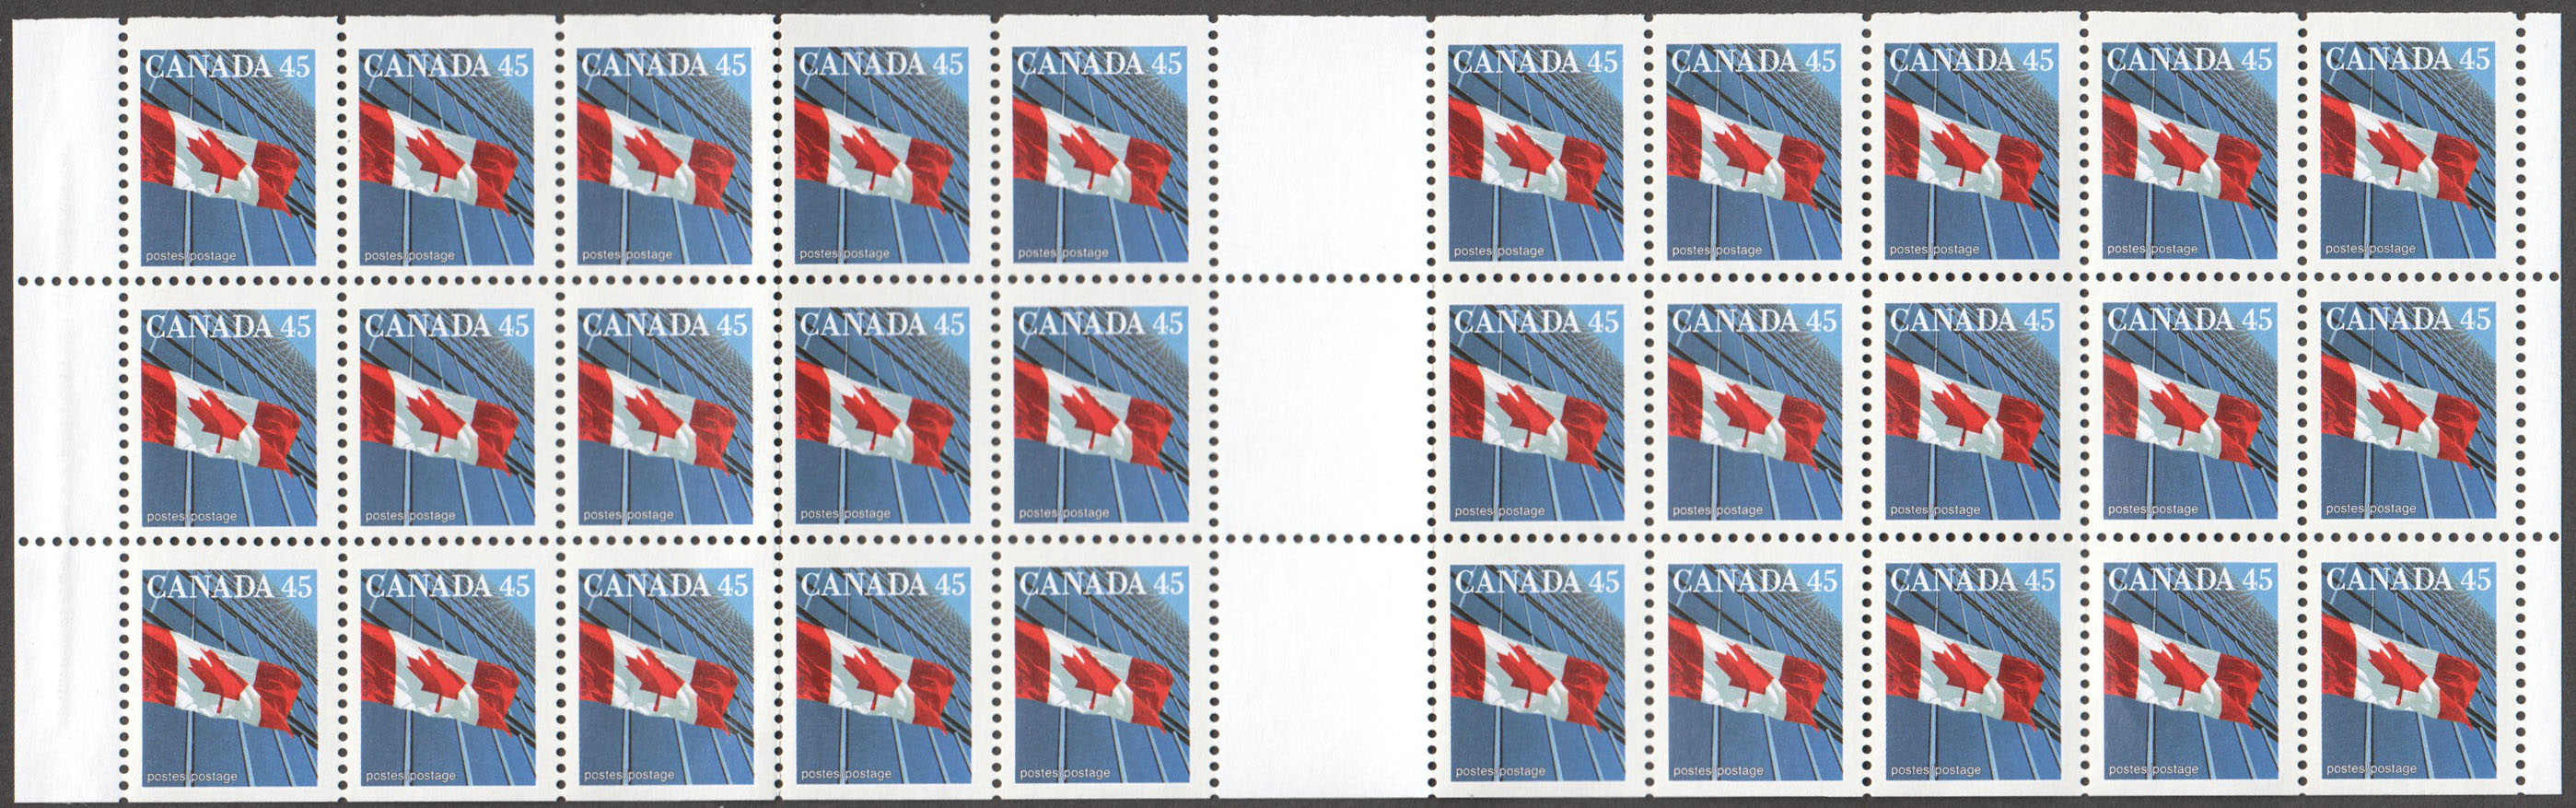 Canada Scott 1362b MNH (A2-4) - Click Image to Close